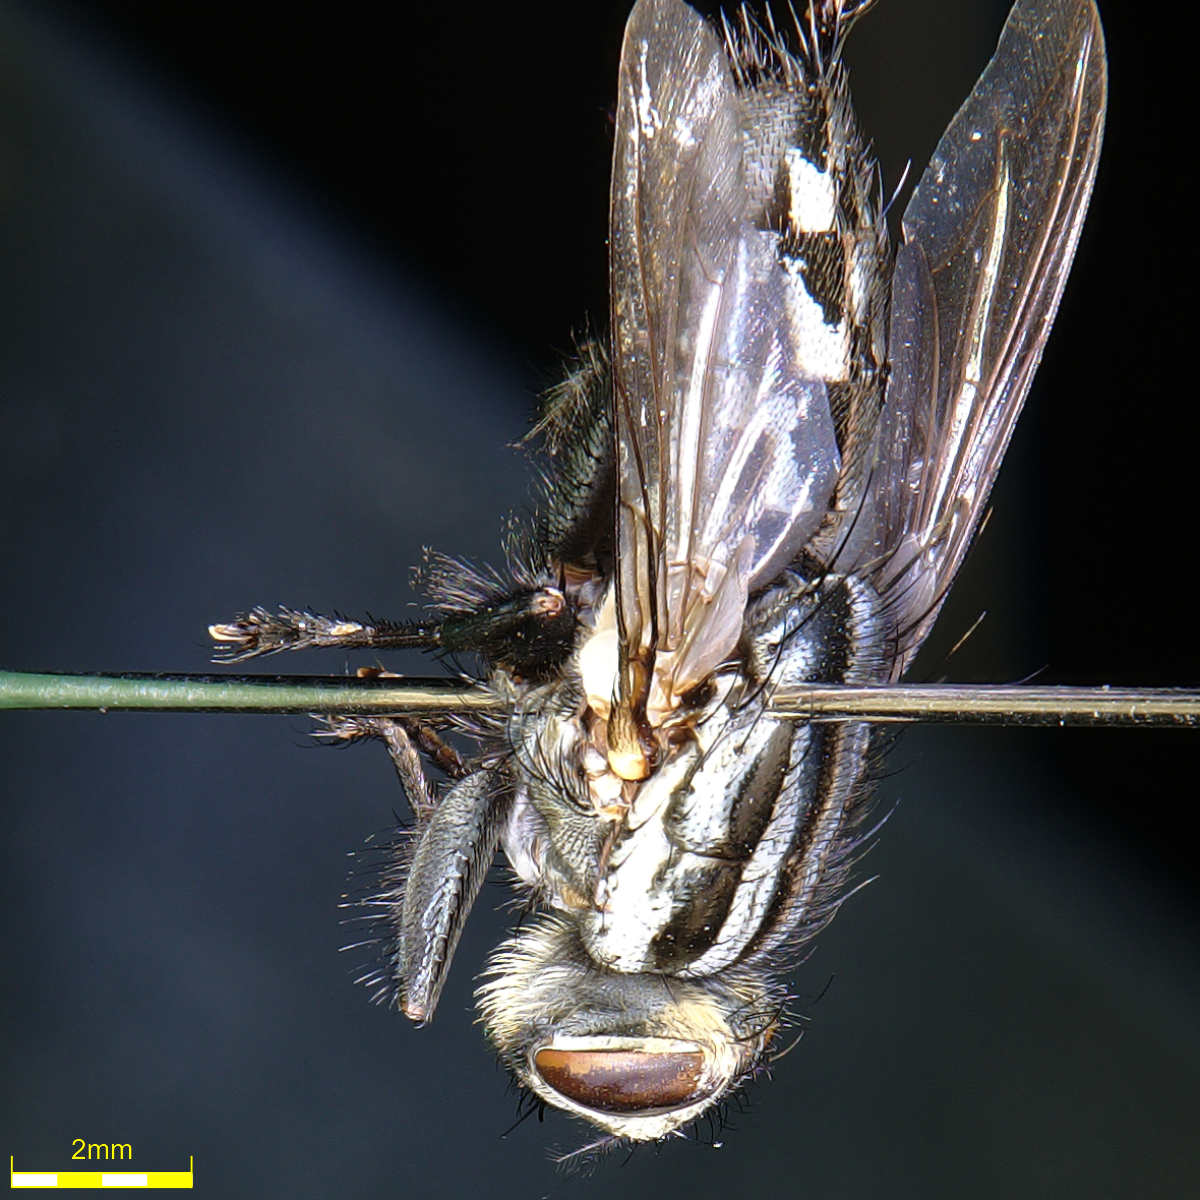 Studying flies using a digital microscope